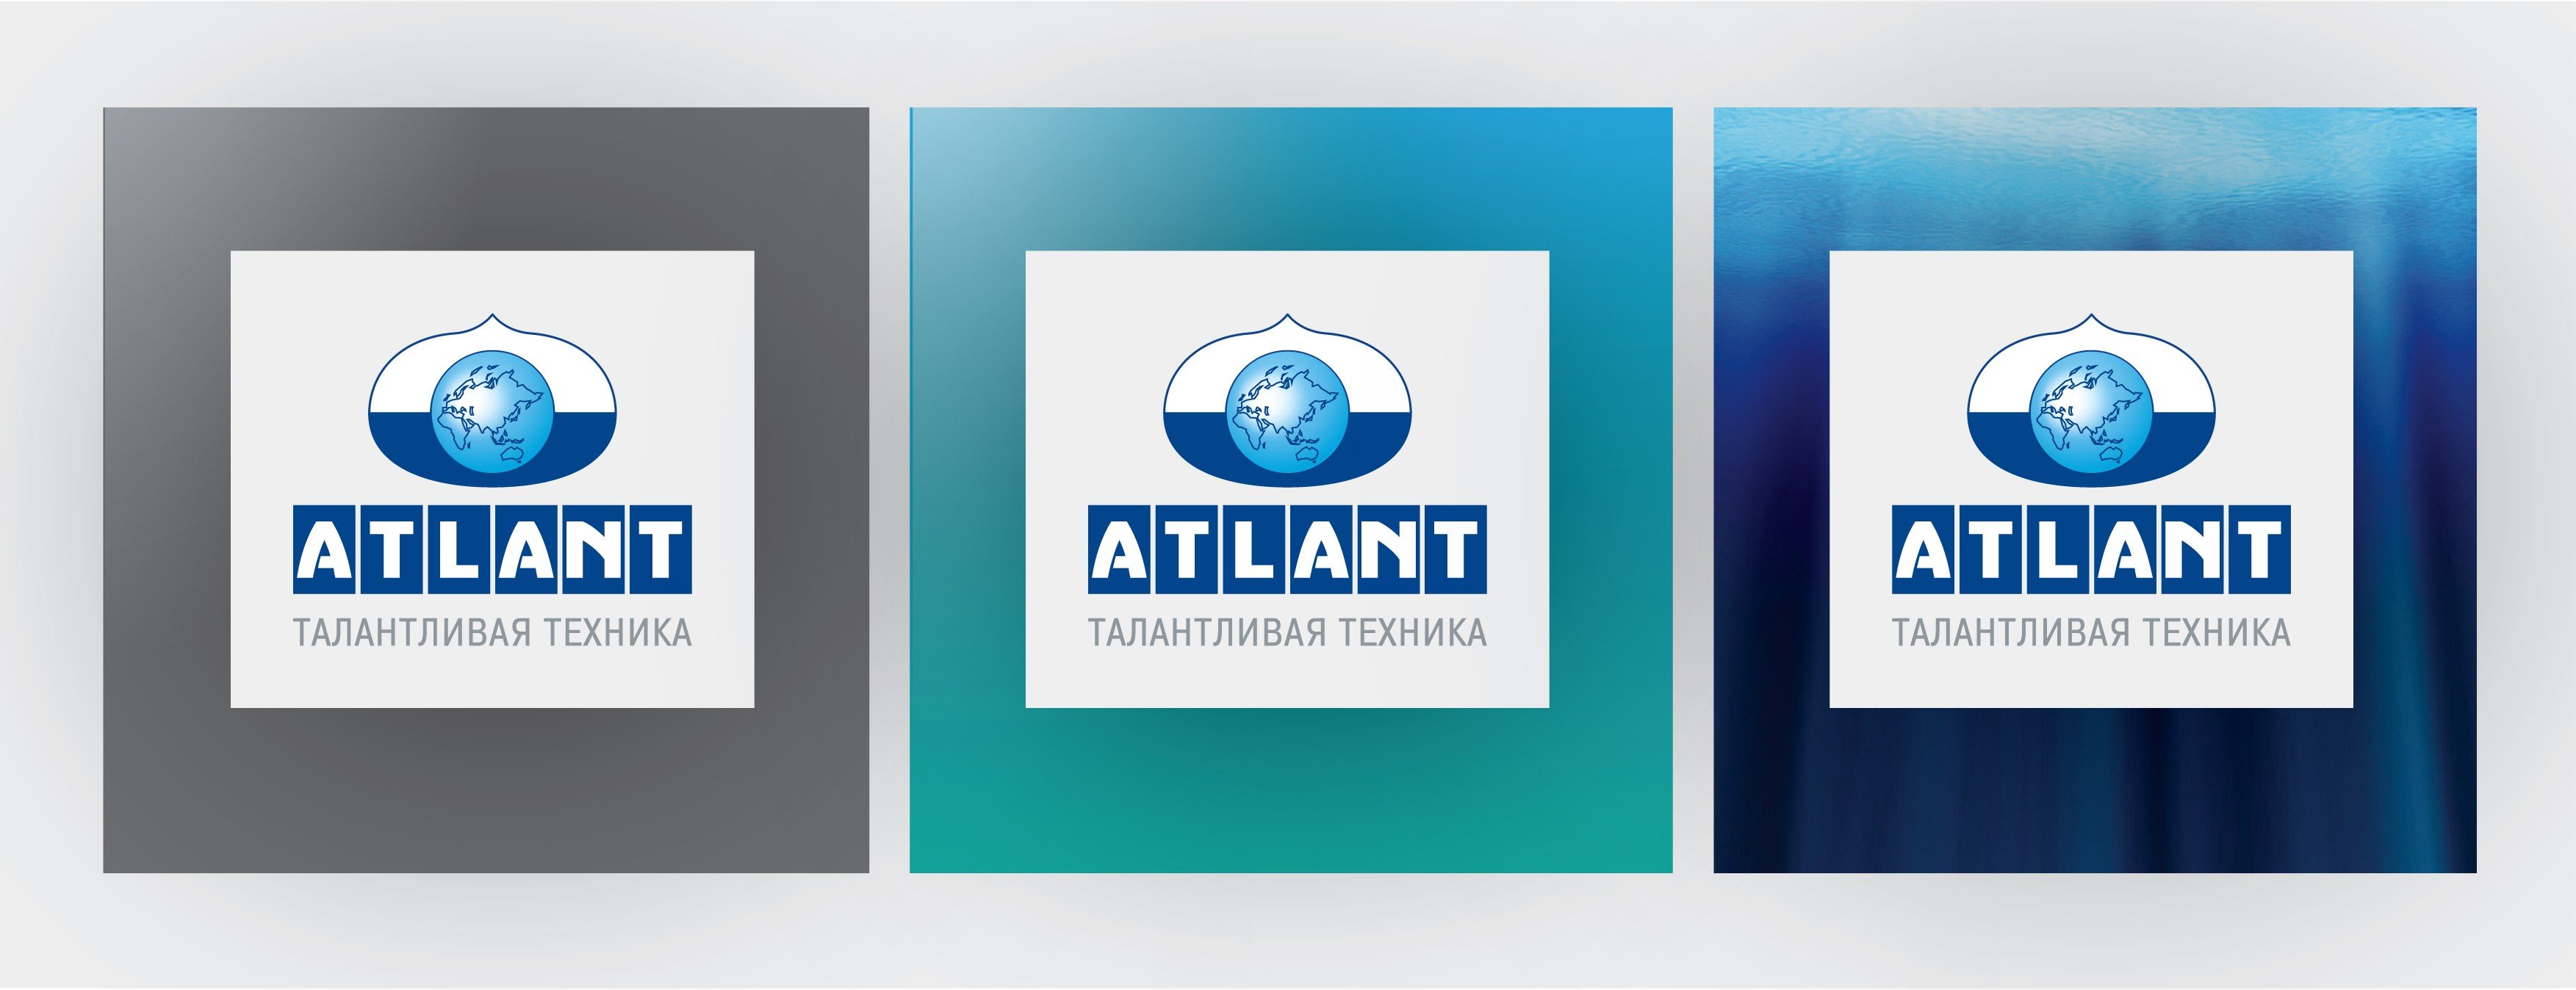 Смо атлант. ЗАО Атлант. Атлант логотип техники. Продукция предприятия Атлант. Завод Атлант логотип.